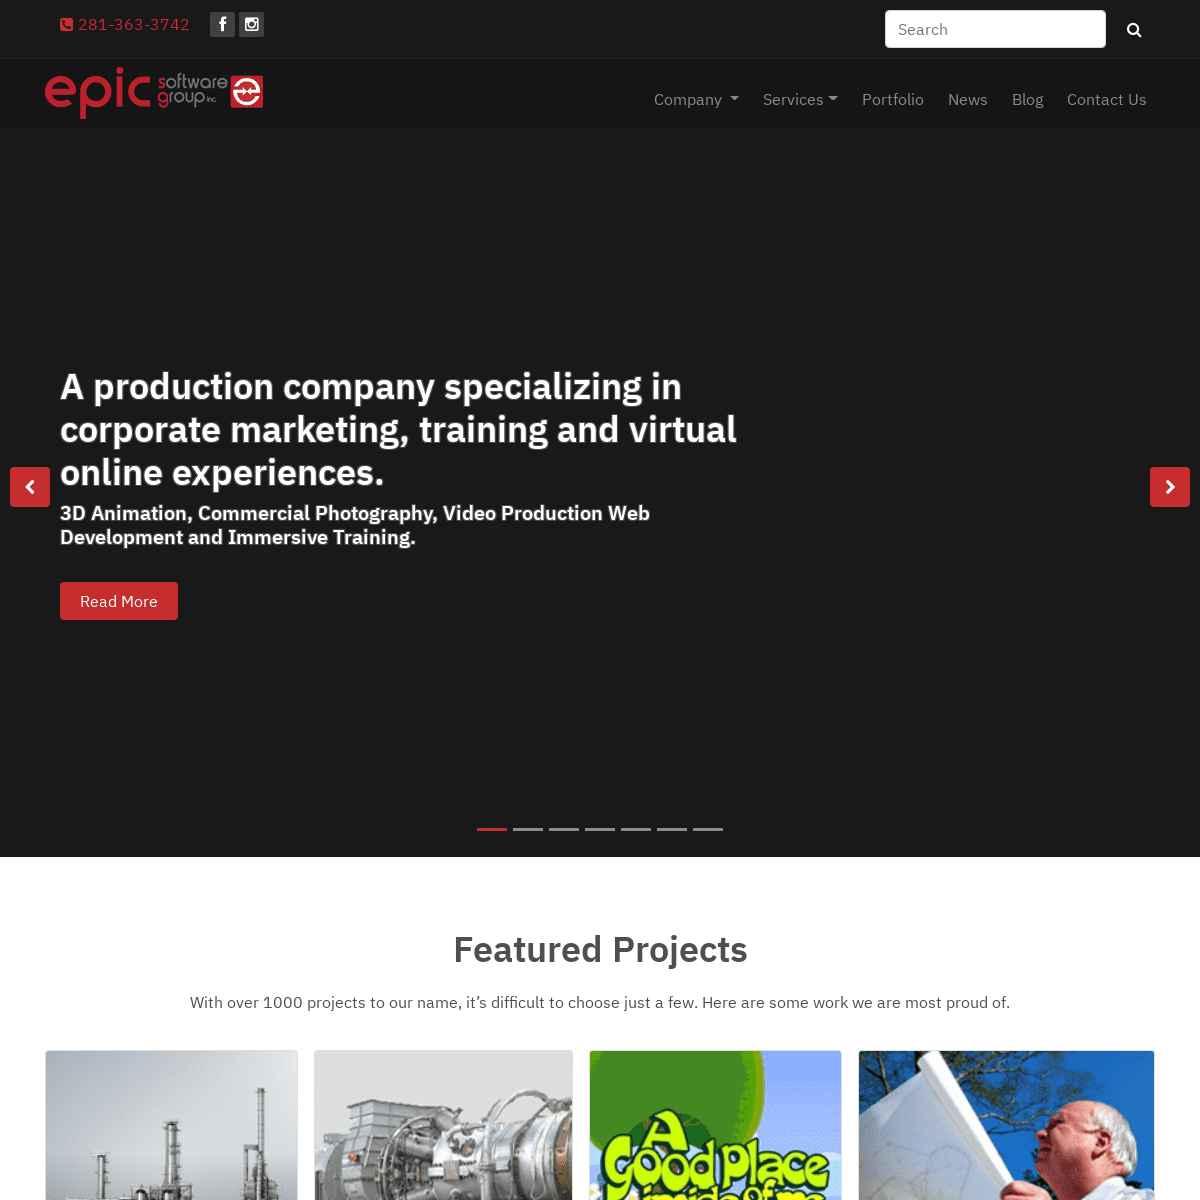 A complete backup of epicsoftware.com